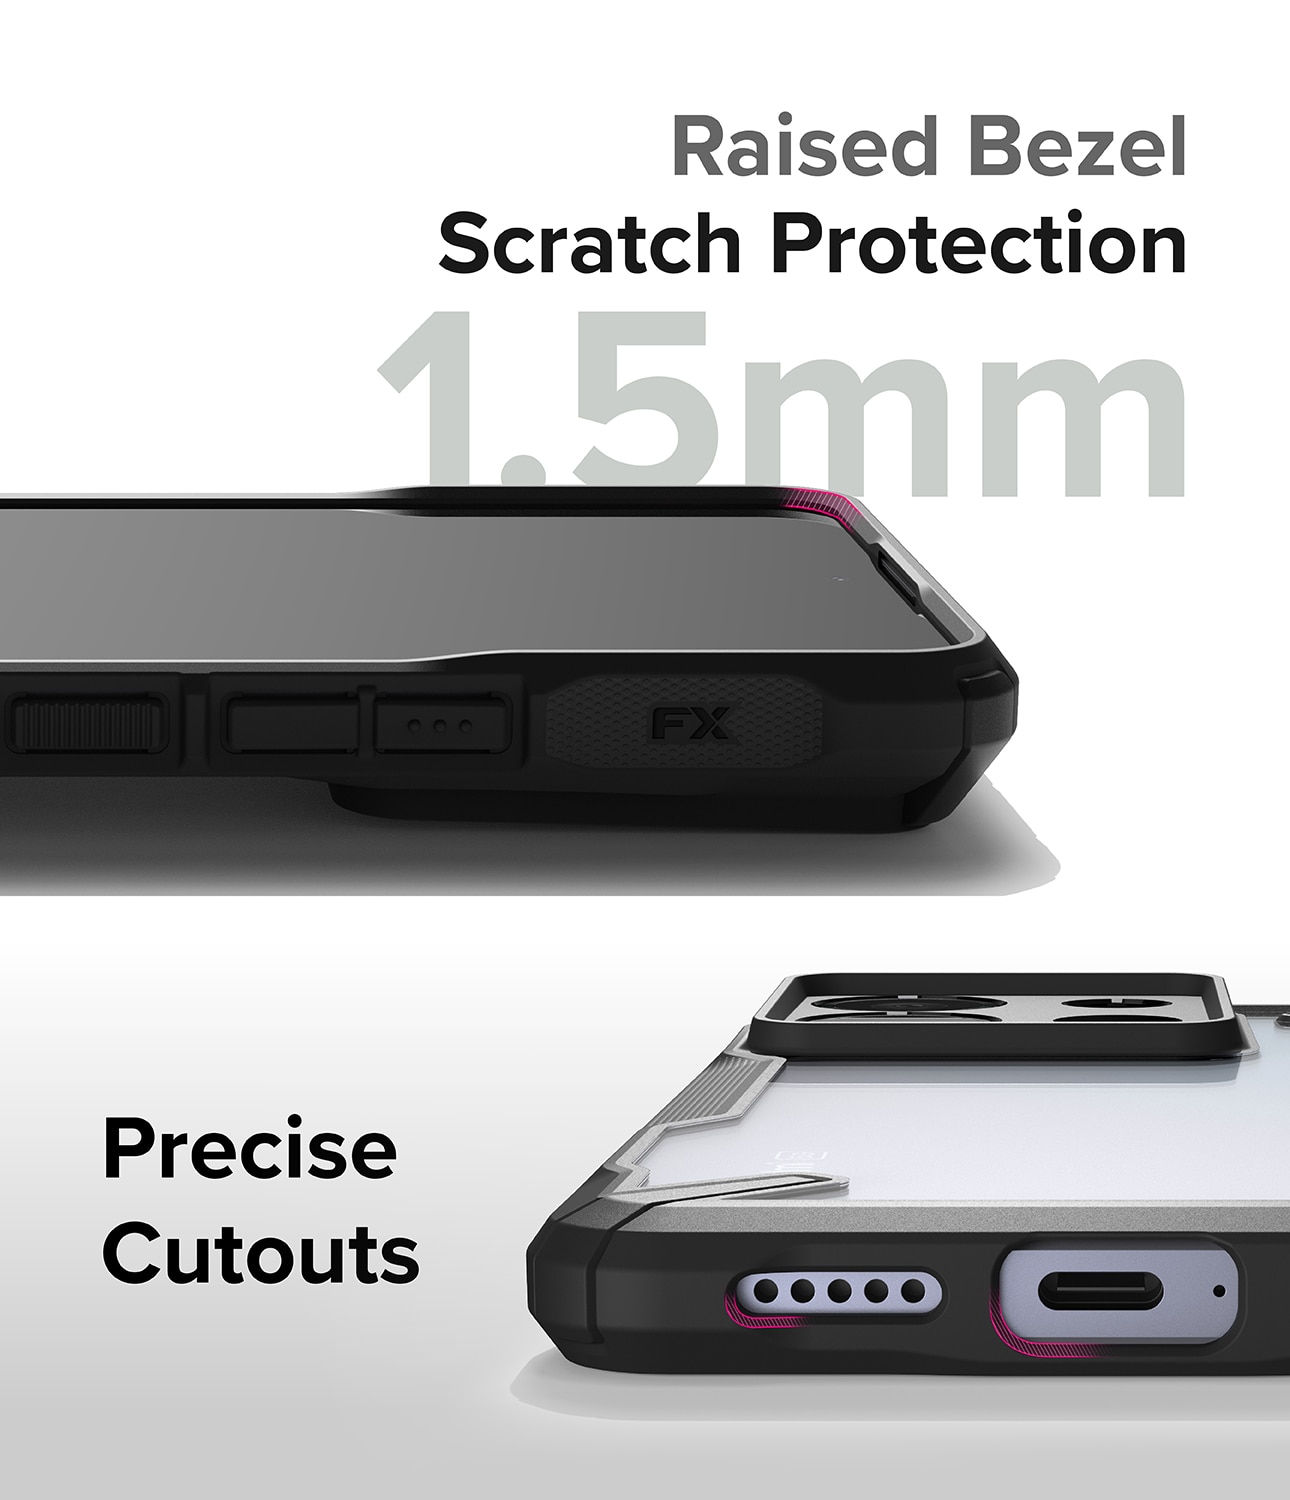 Fusion X Case Xiaomi Redmi Note 13 Pro schwarz